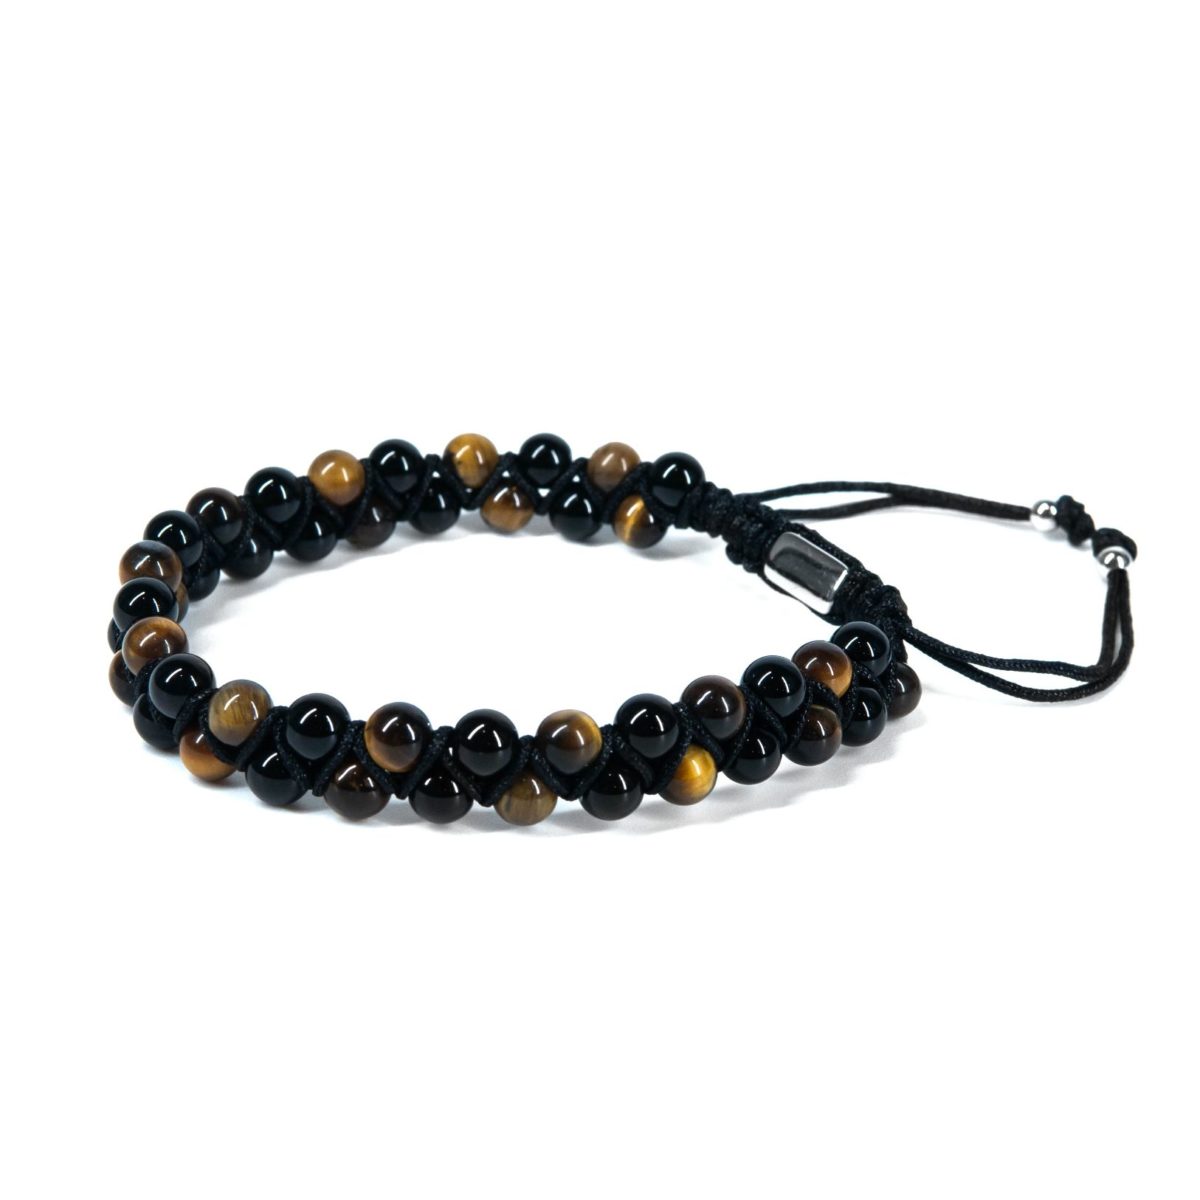 https://m.clubbella.co/product/edmund-tiger-eyes-black-onyx-bracelet/ Edmund Tiger Eyes Black Onyx bracelet (4)